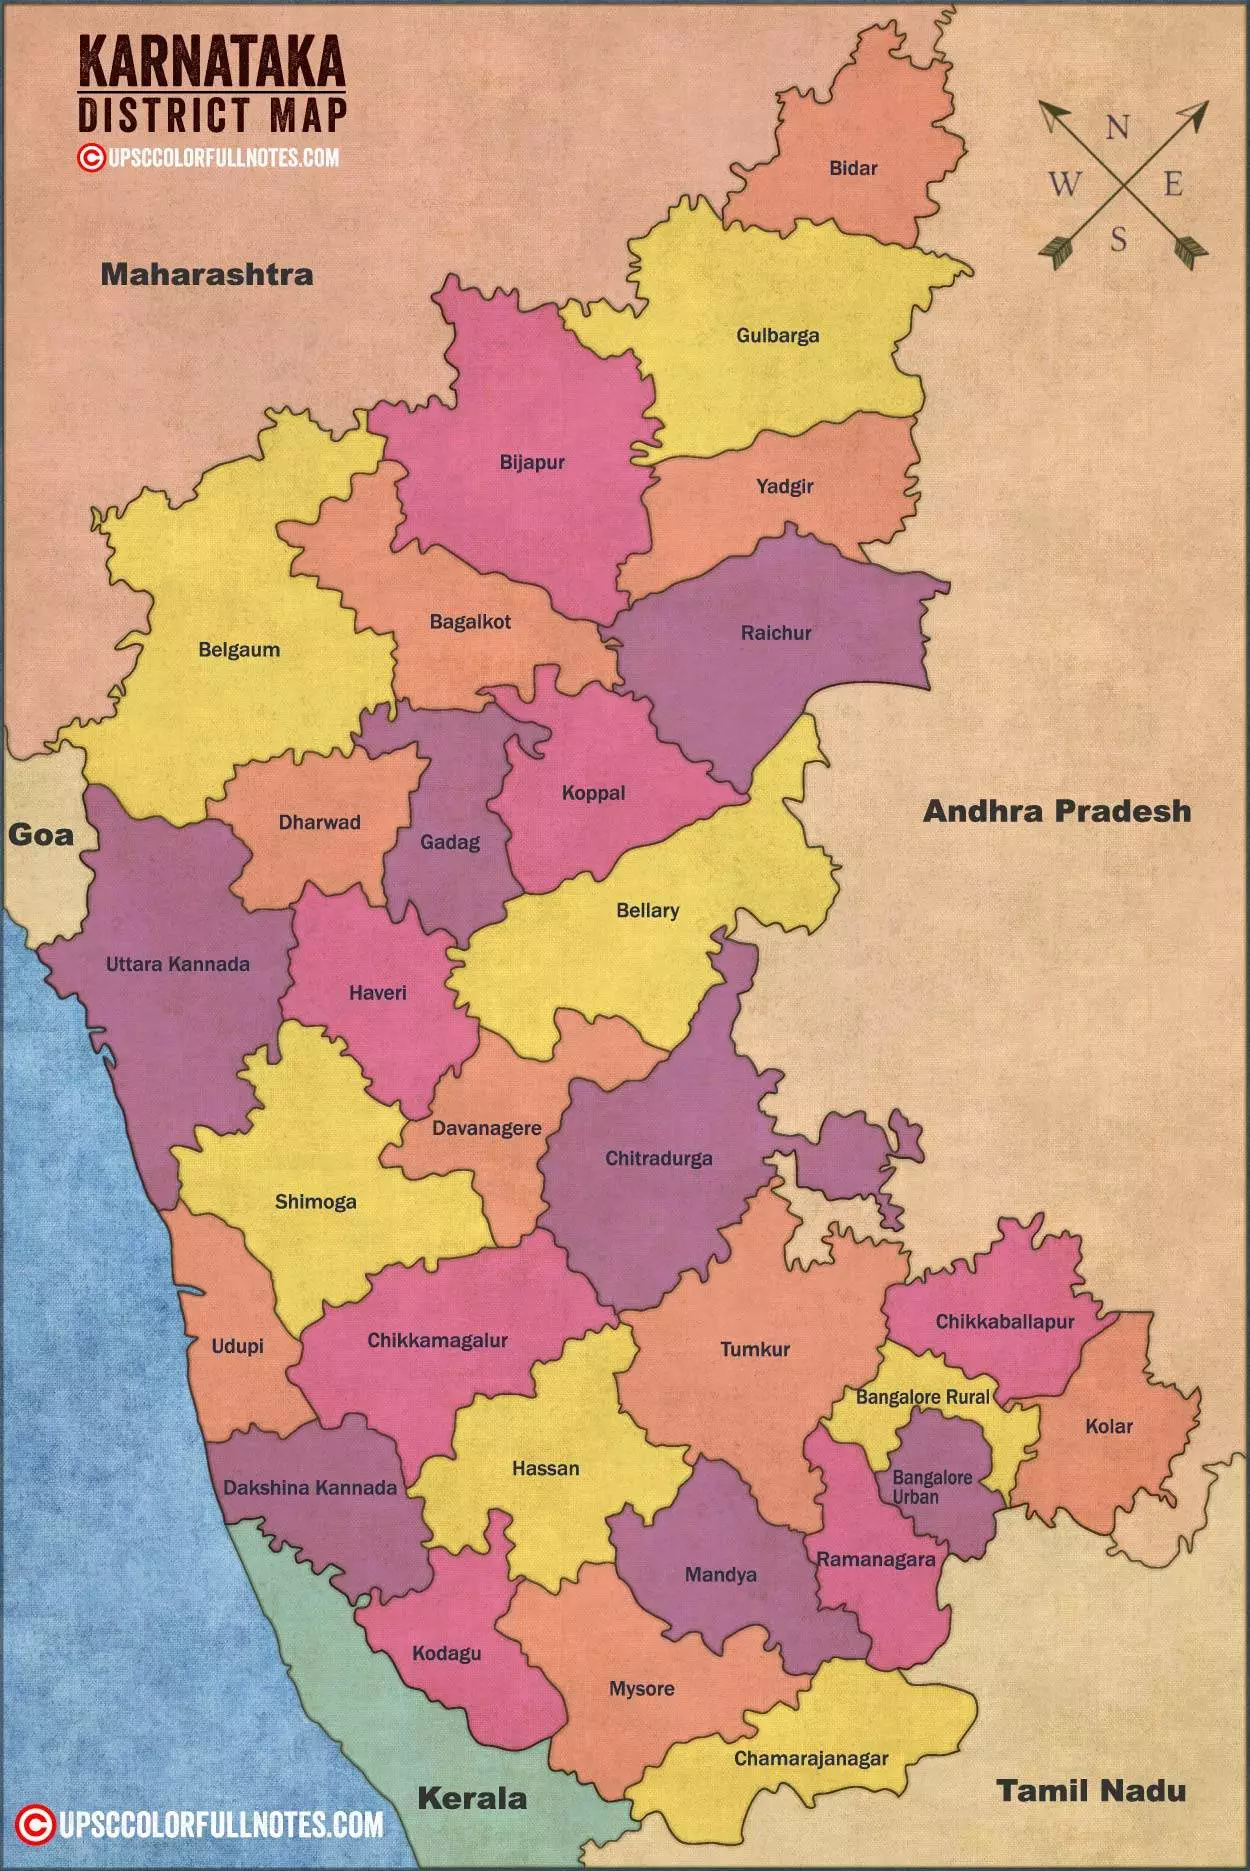 Karnataka Map Vector Art, Icons, and Graphics for Free Download